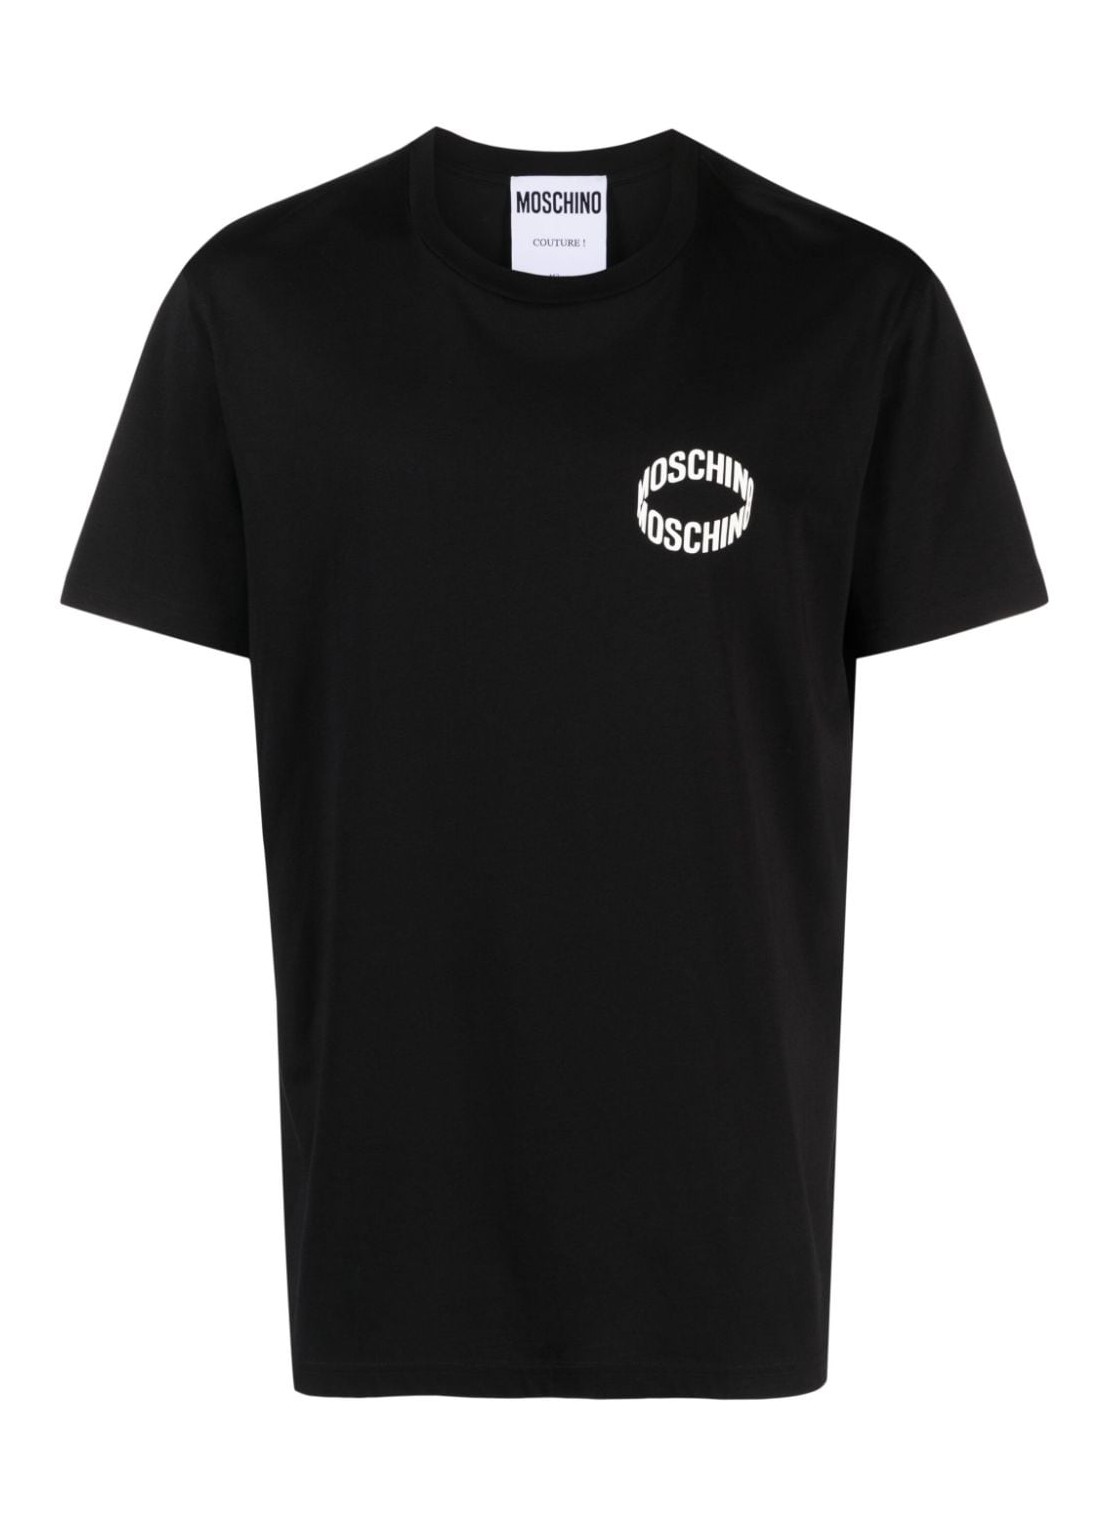 Camiseta moschino couture t-shirt man t-shirt 07152041 a1555 talla negro
 